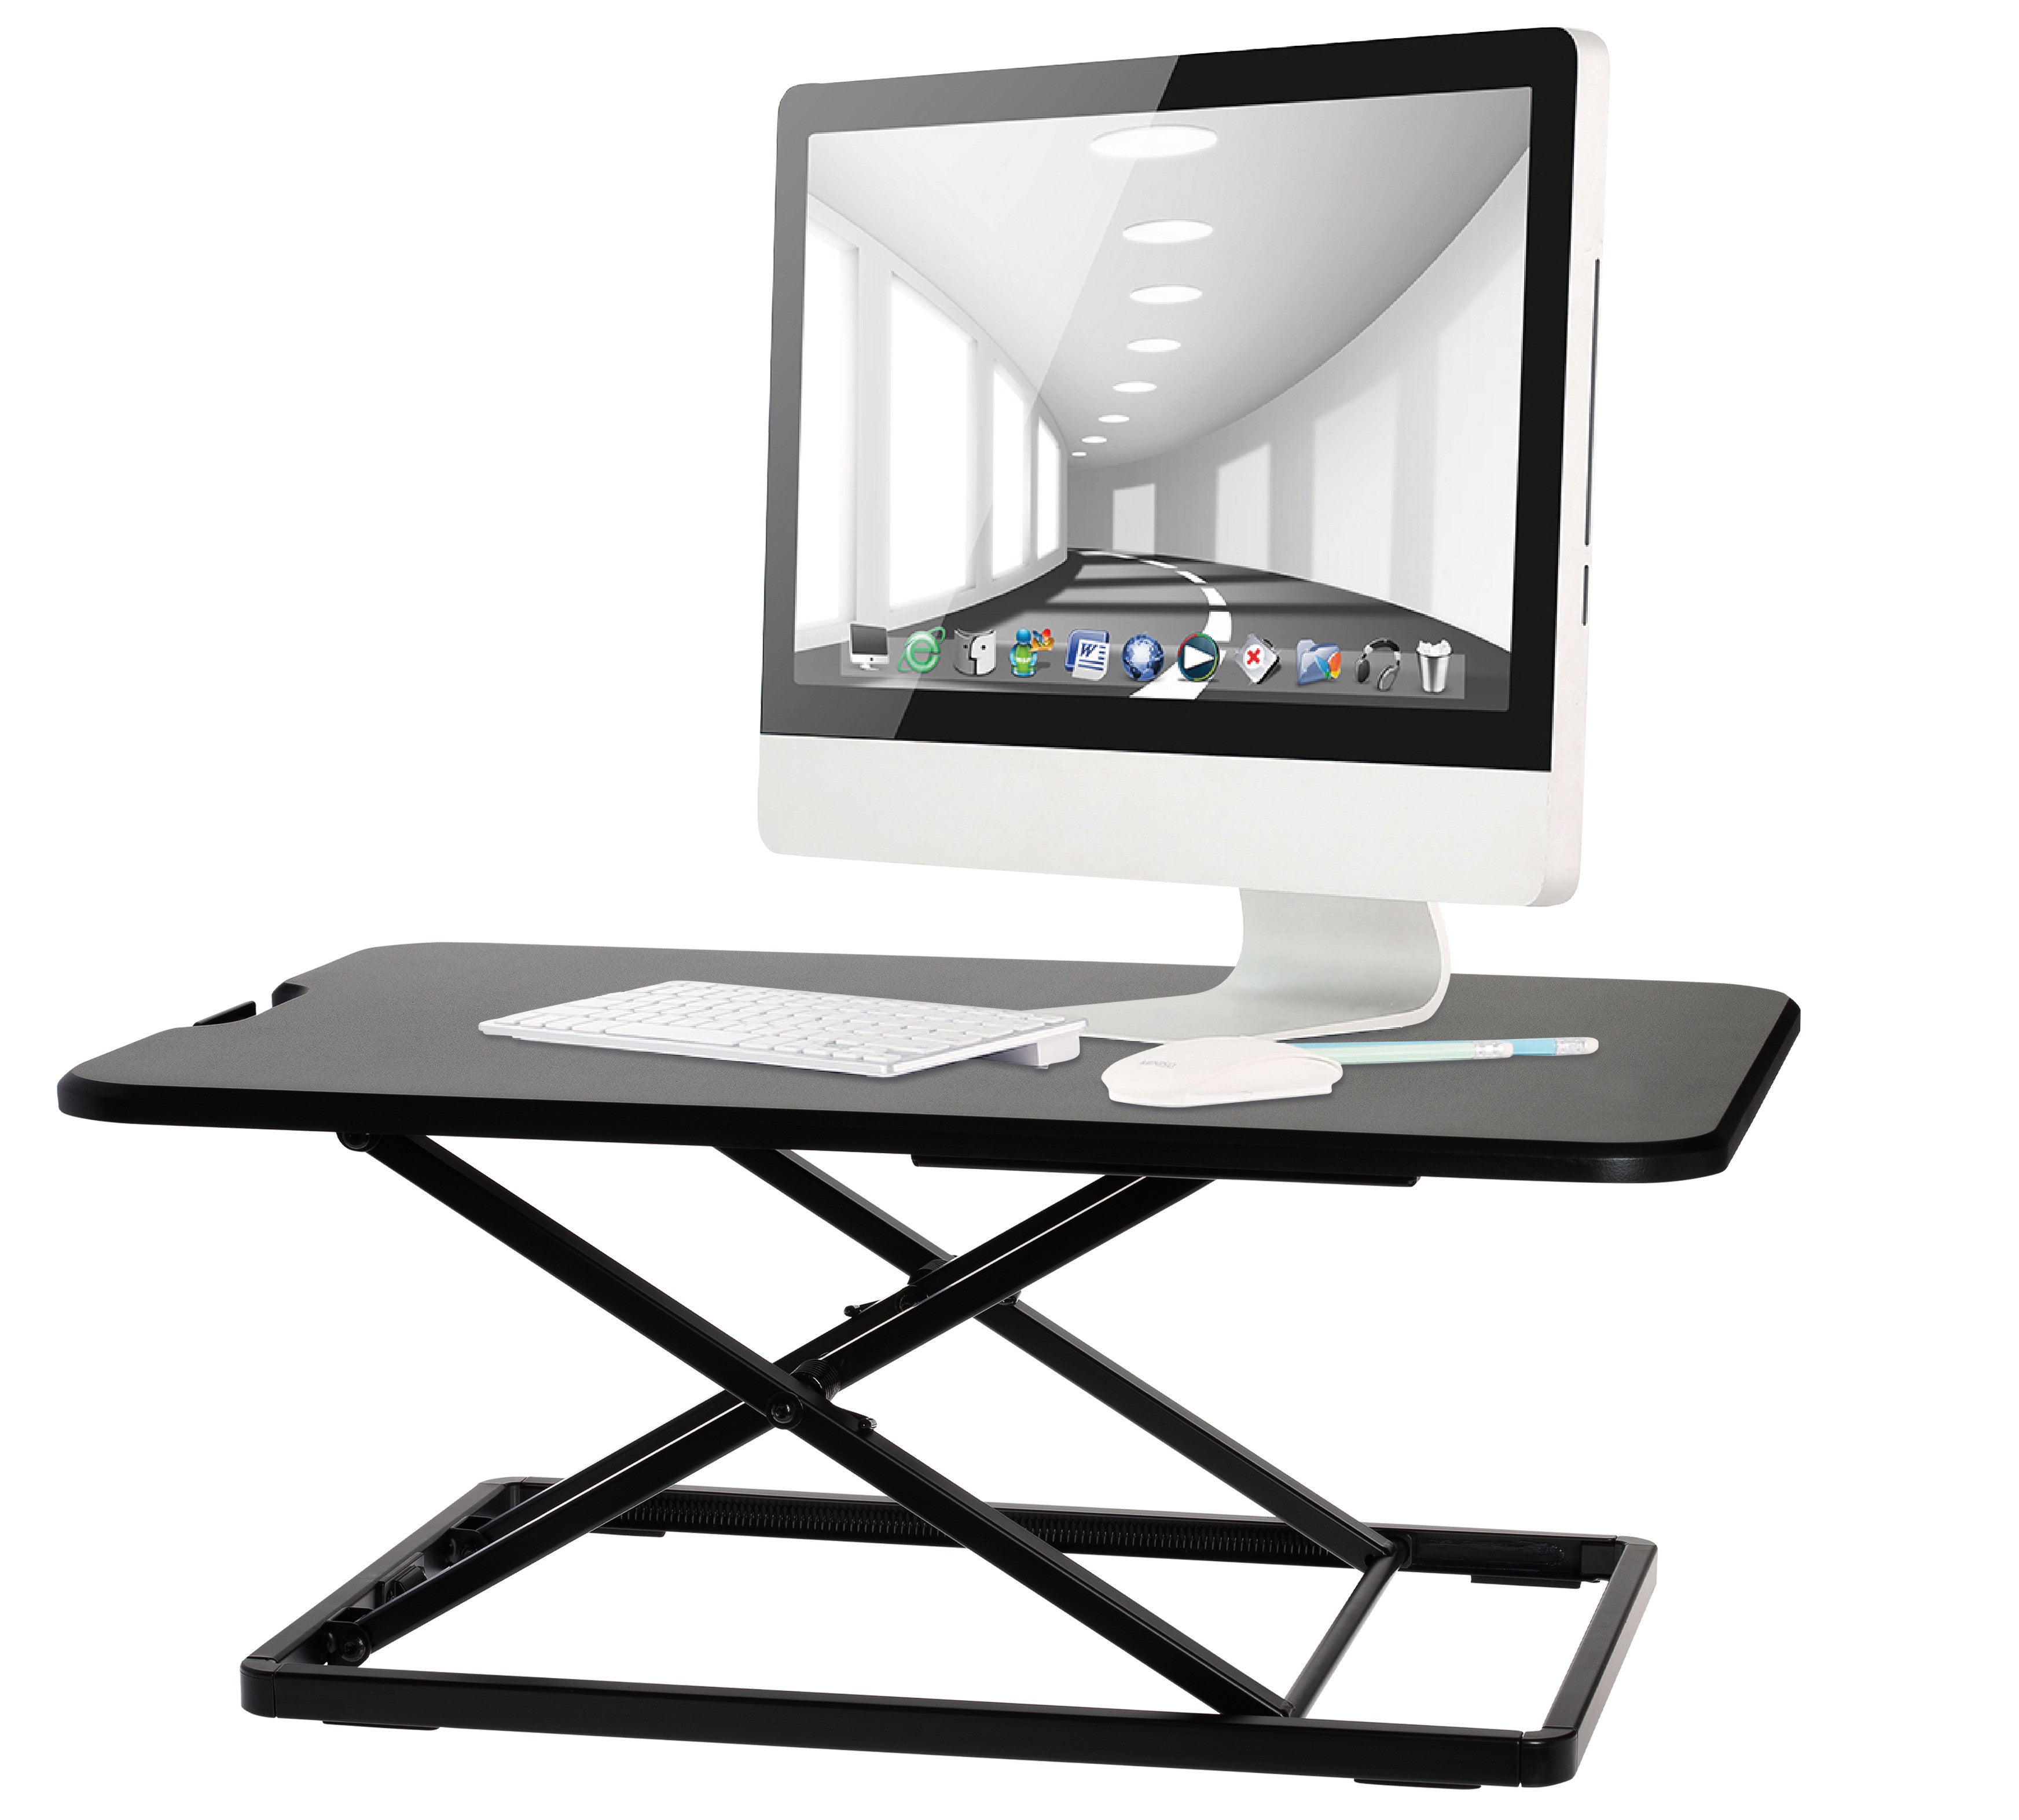 ProperAV LITE Stand Up Desk Converter with Variable Height Settings - Black